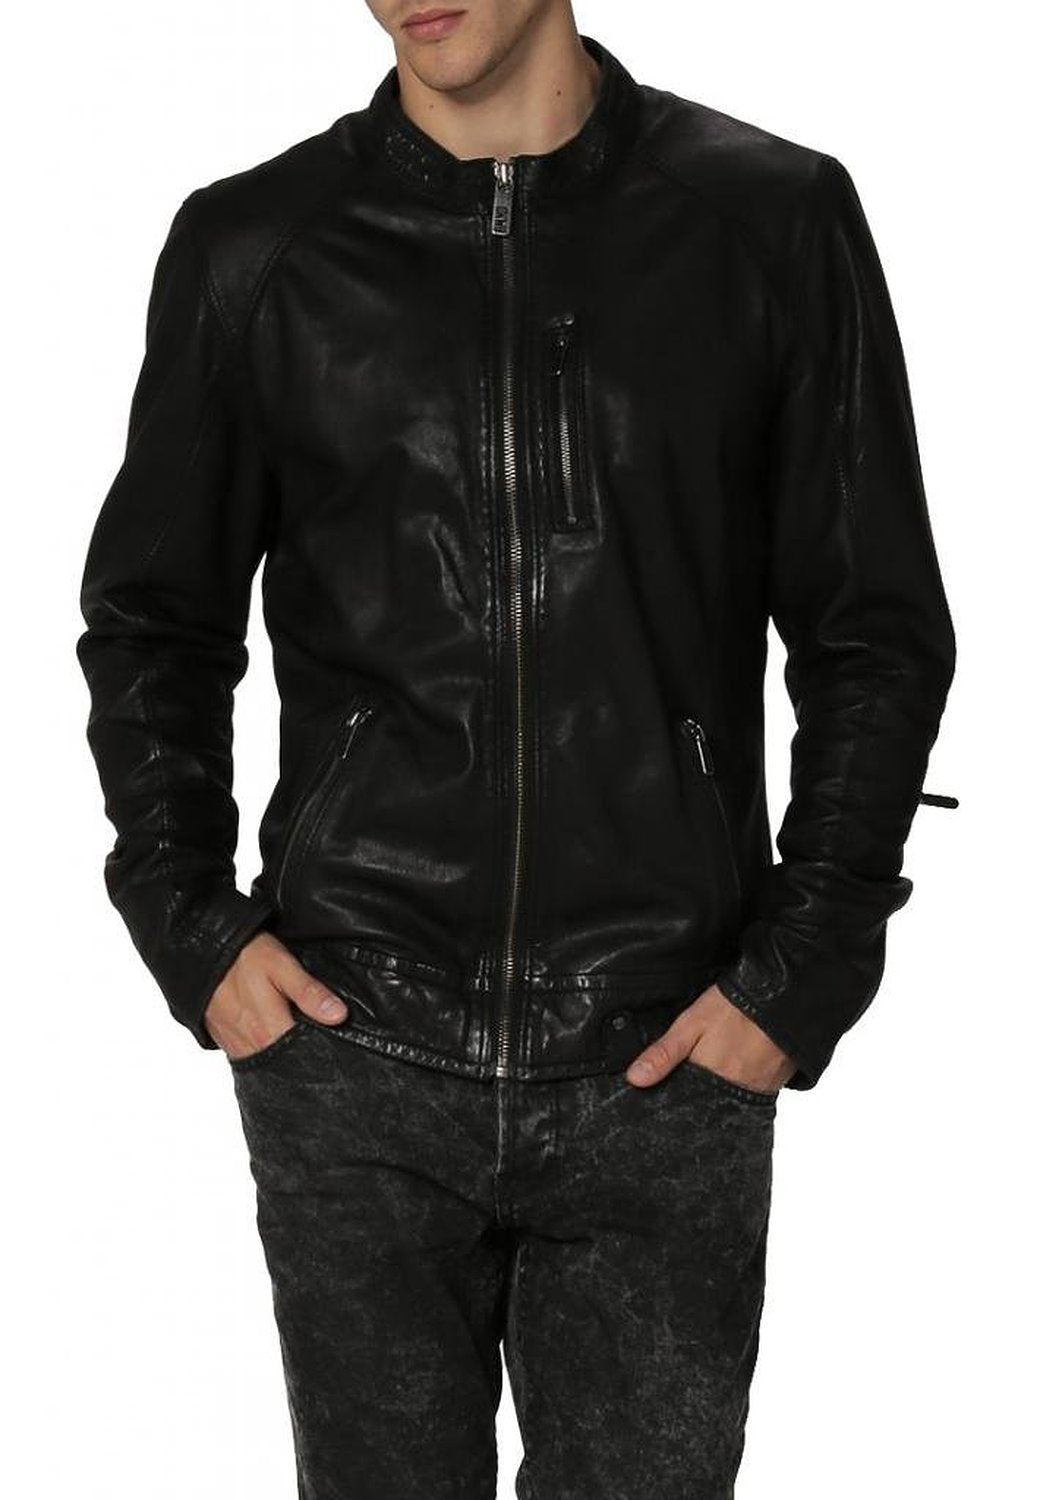 Leather Jackets Hub Mens Genuine Lambskin Leather Jacket (Black, Racer Jacket) - 1501319